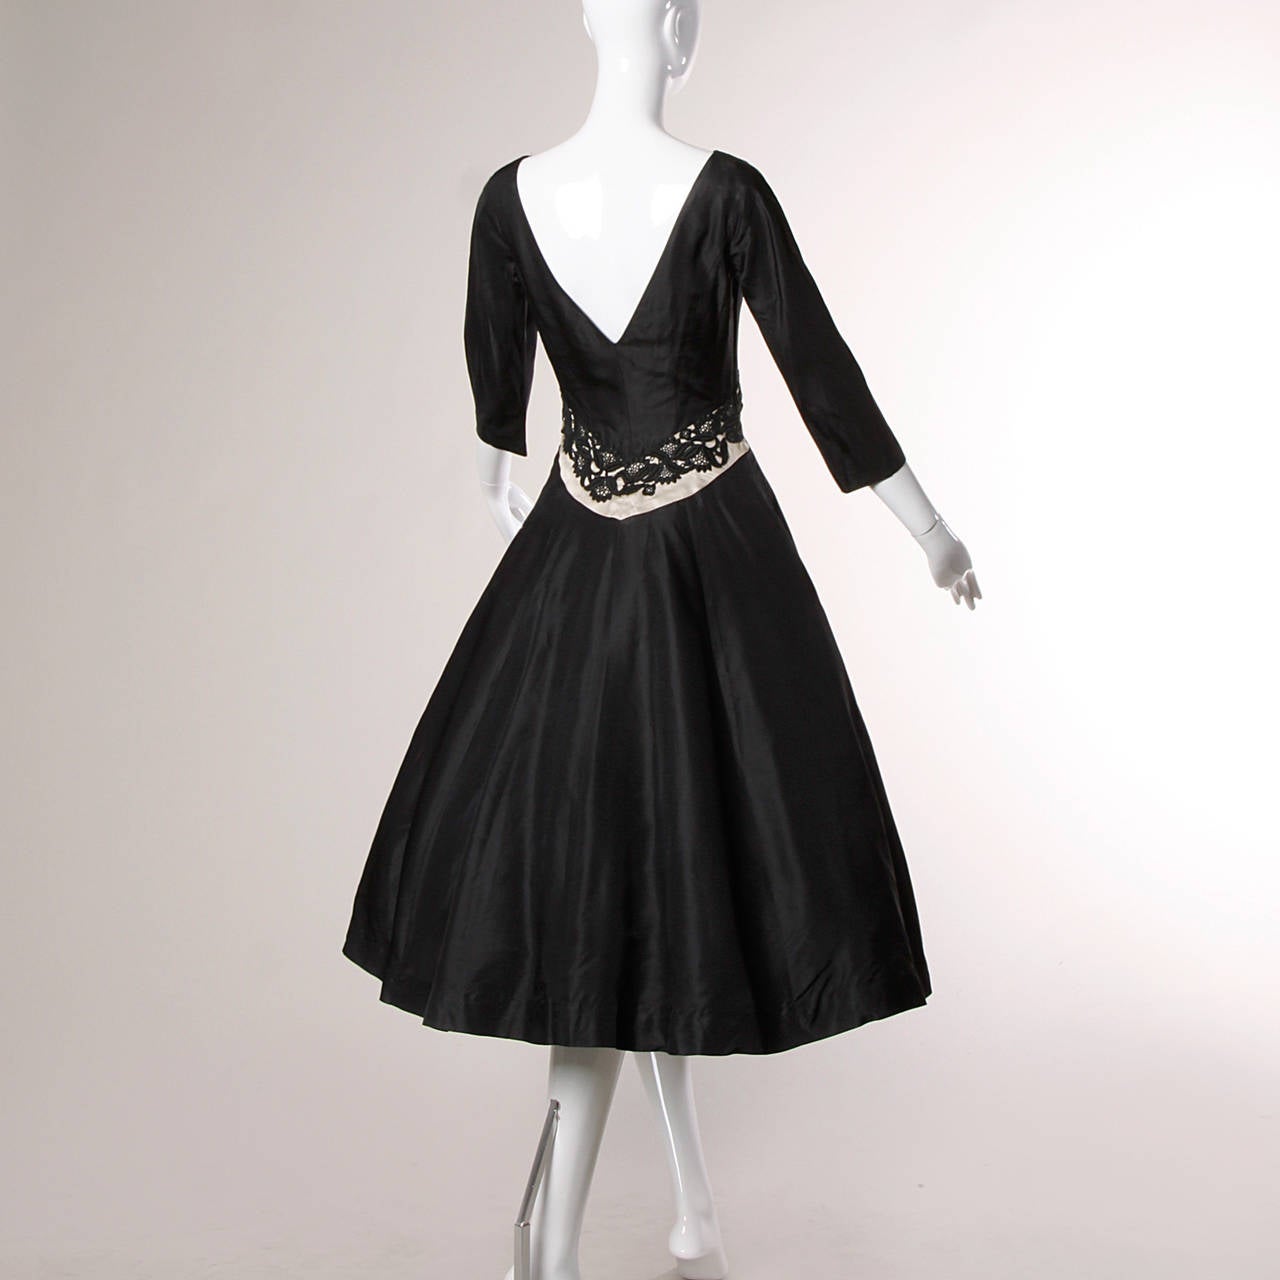 David Hart Vintage 1950s Black Silk Cocktail Dress with Lace Trim 2